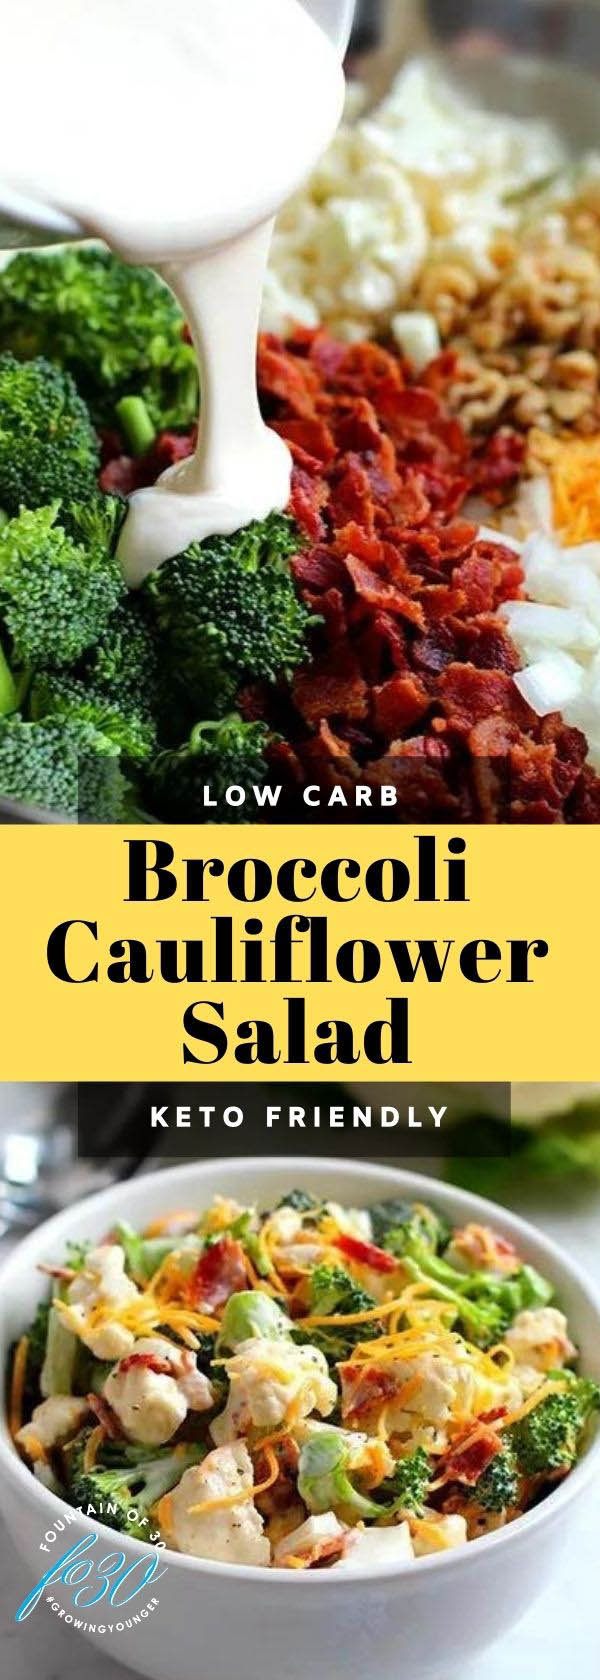 low-carb broccoli cauliflower salad fountainof30